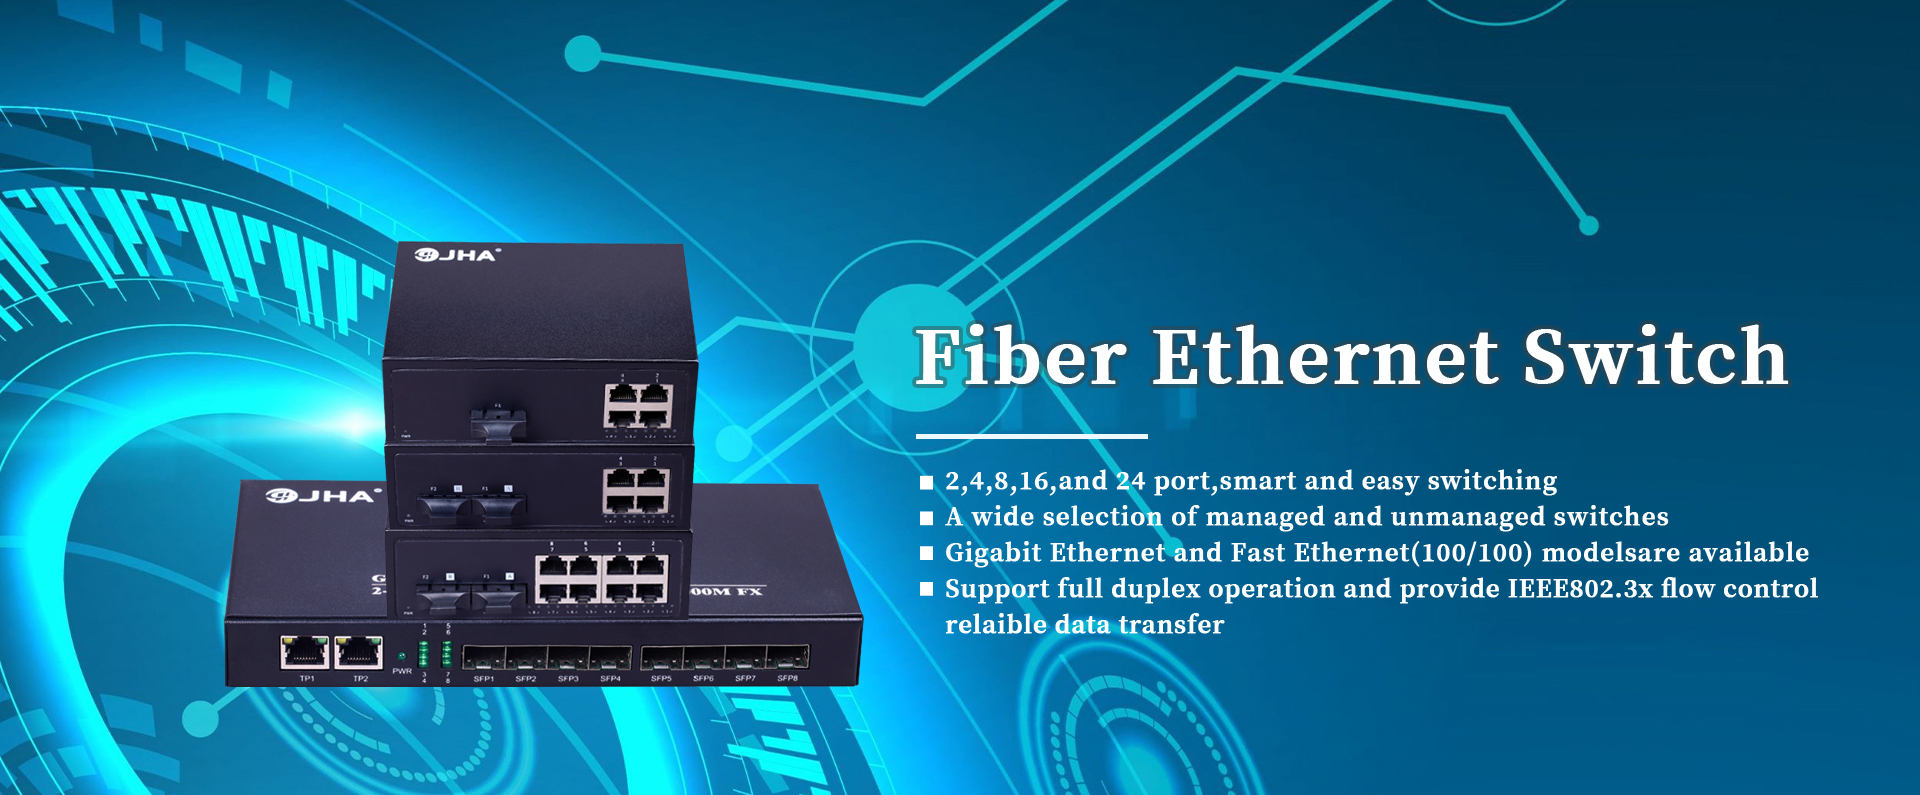 Fiber Ethernet Switch